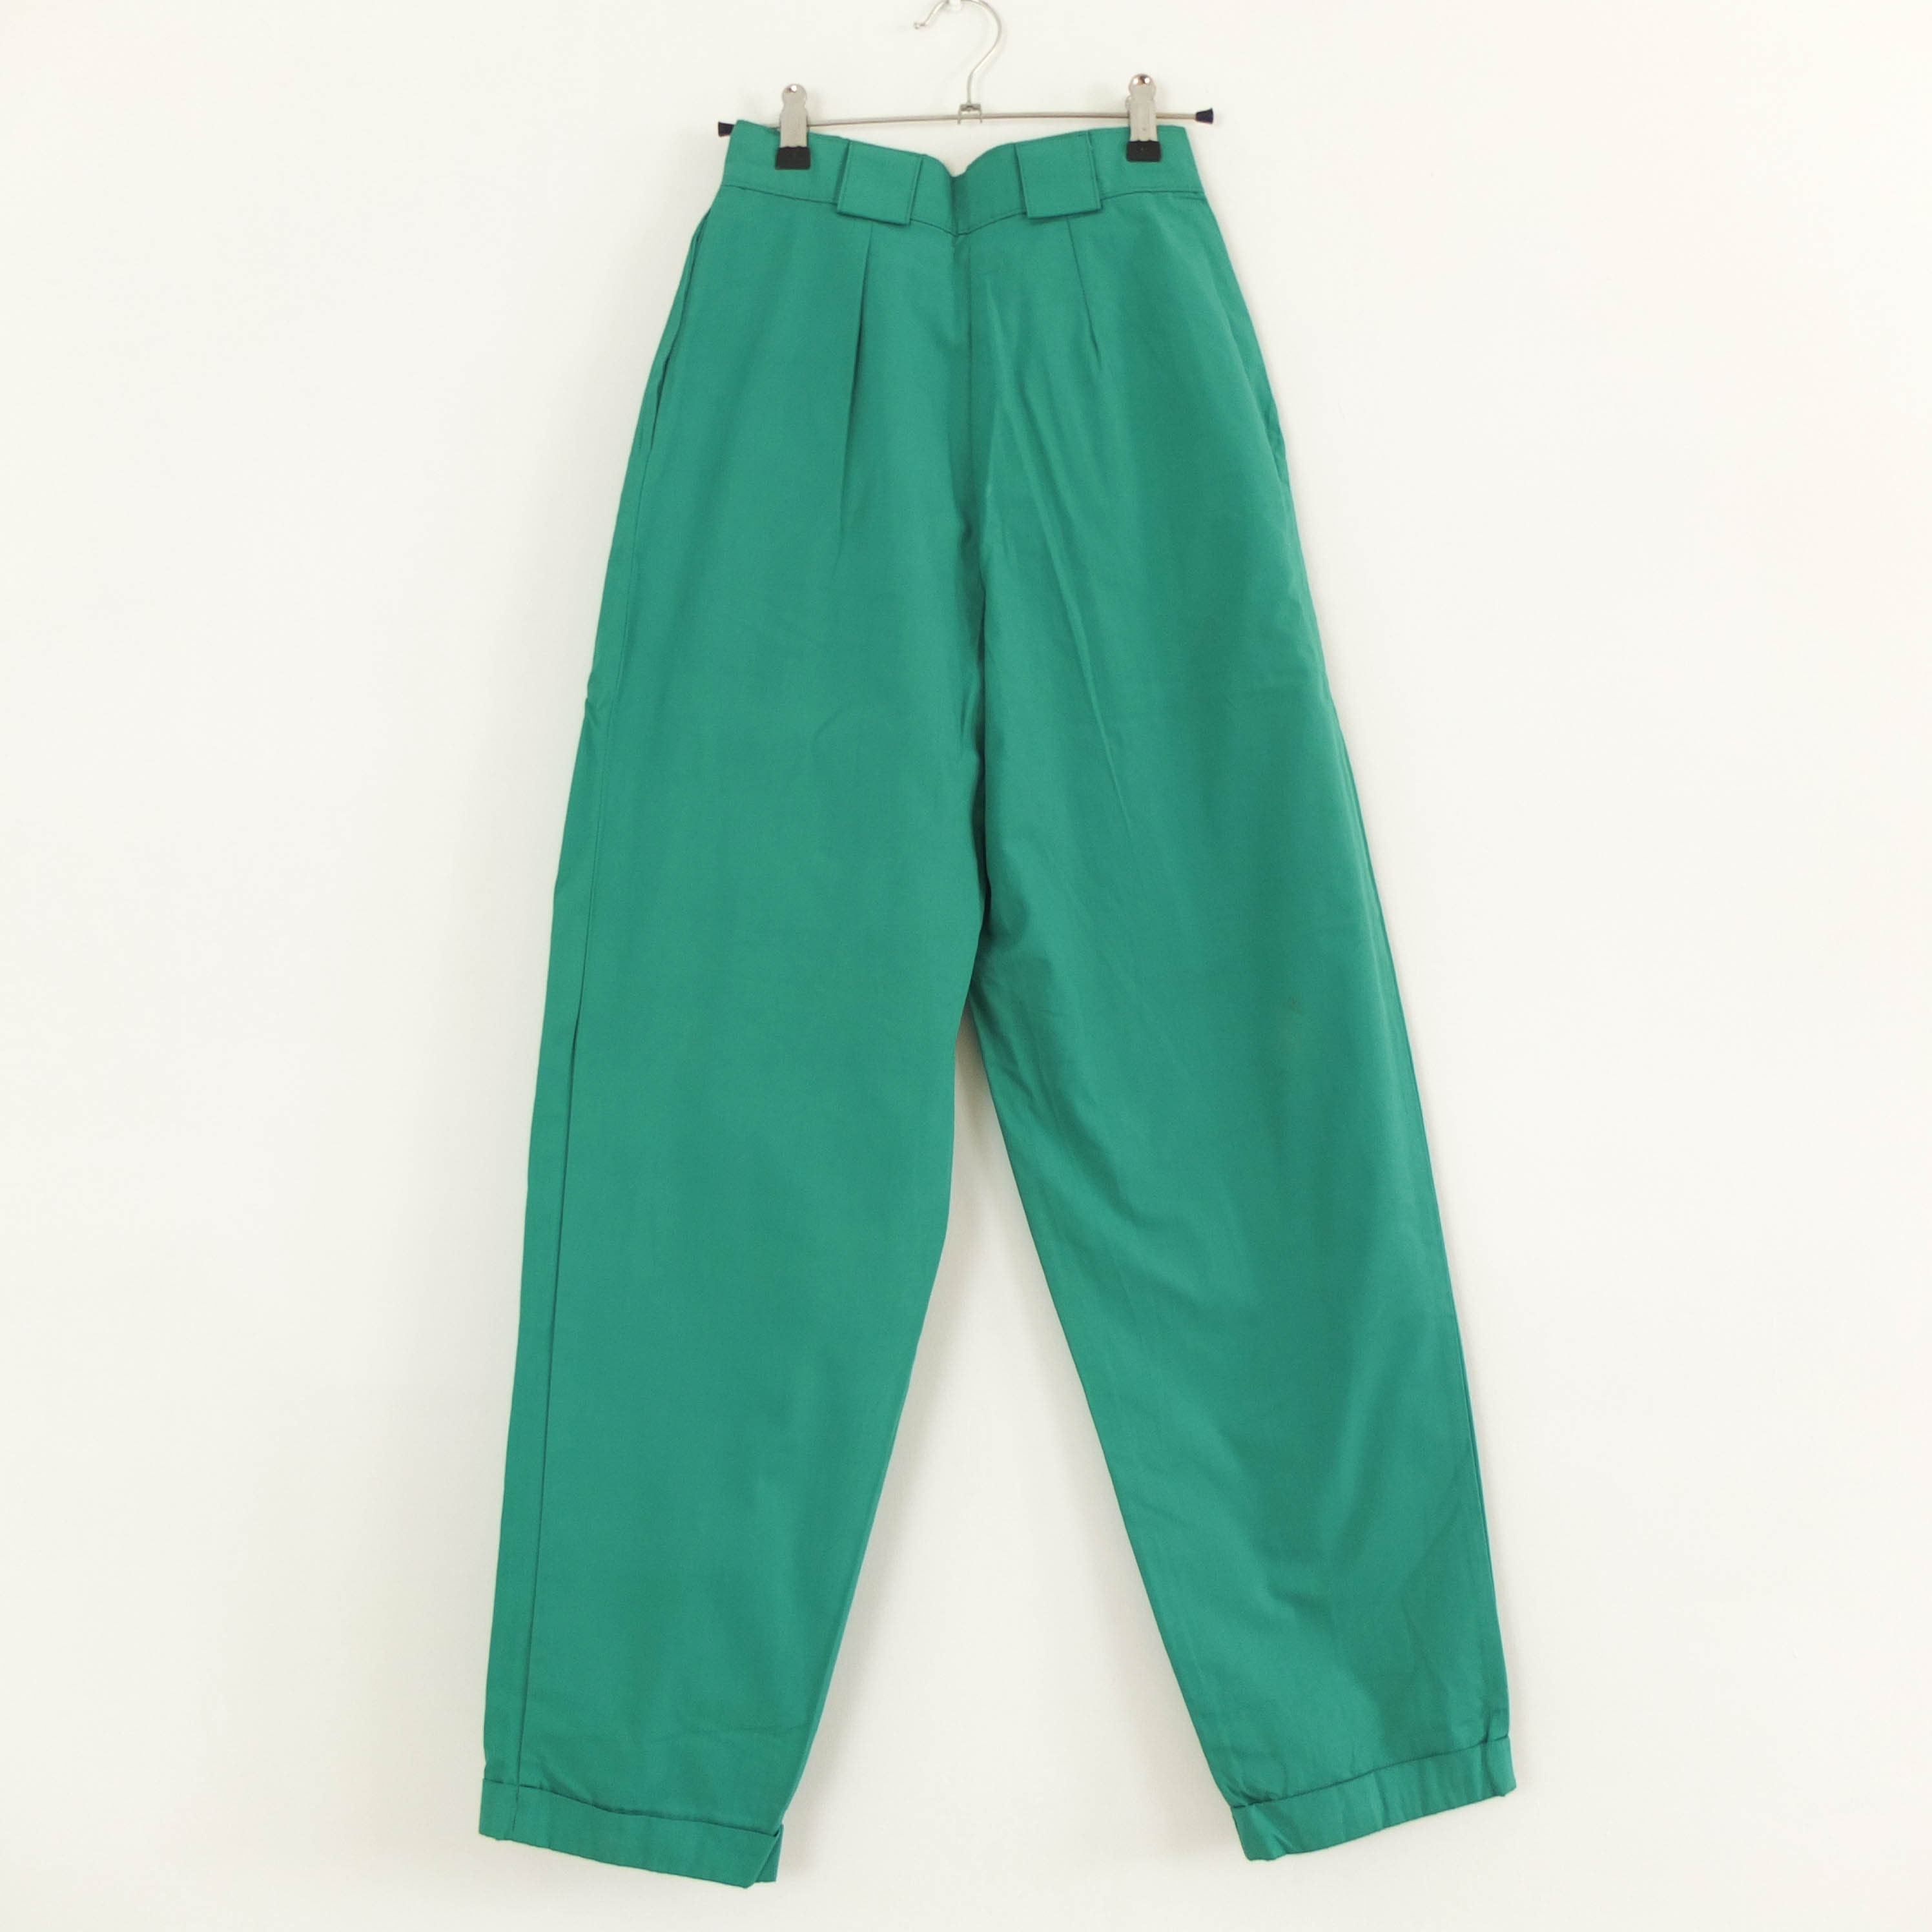 Vintage 80s mom green pants 80s high waist mom pants Green | Etsy